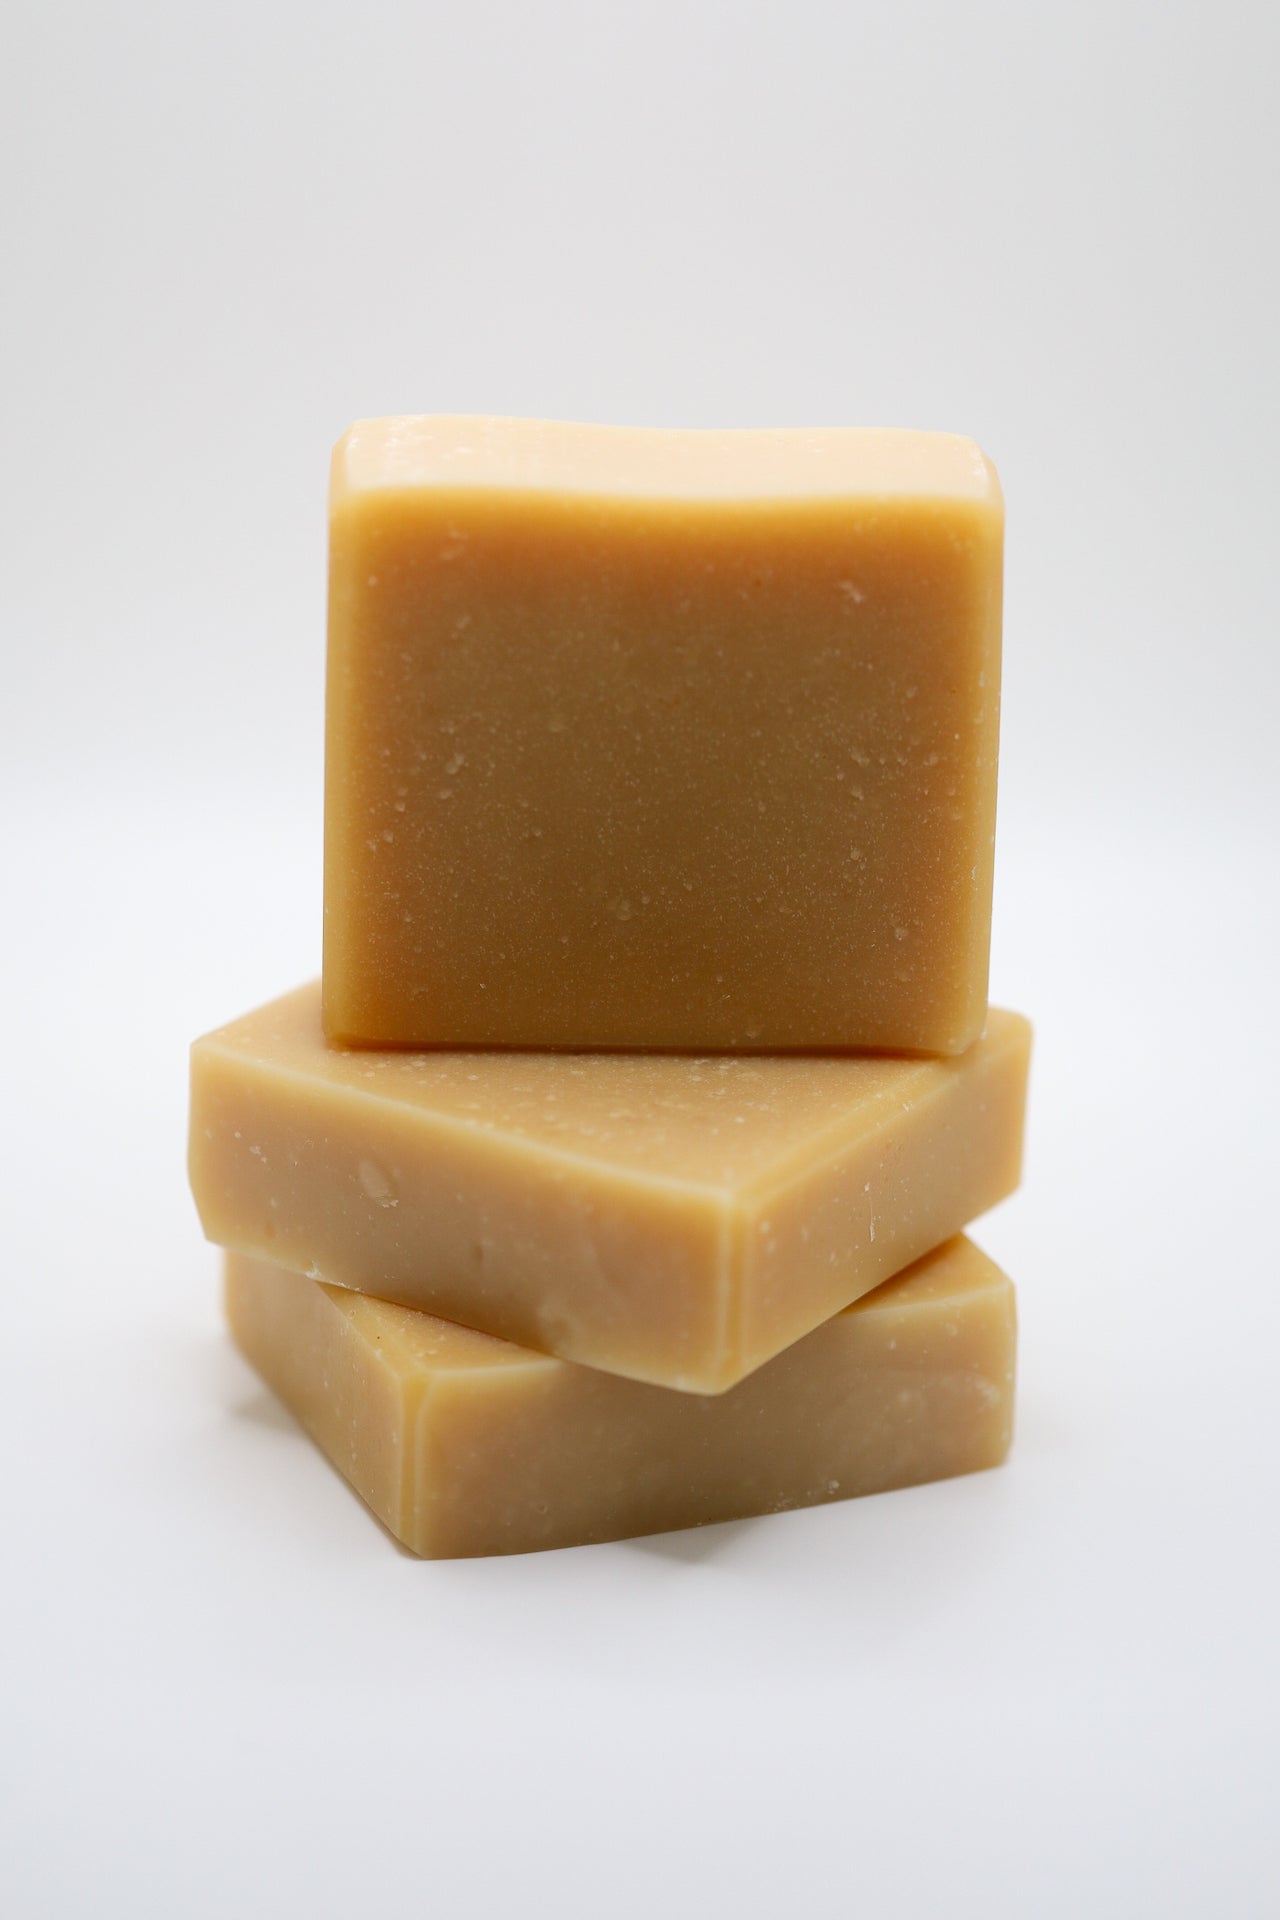 Naked (unscented) Goat Milk Handmade Soap